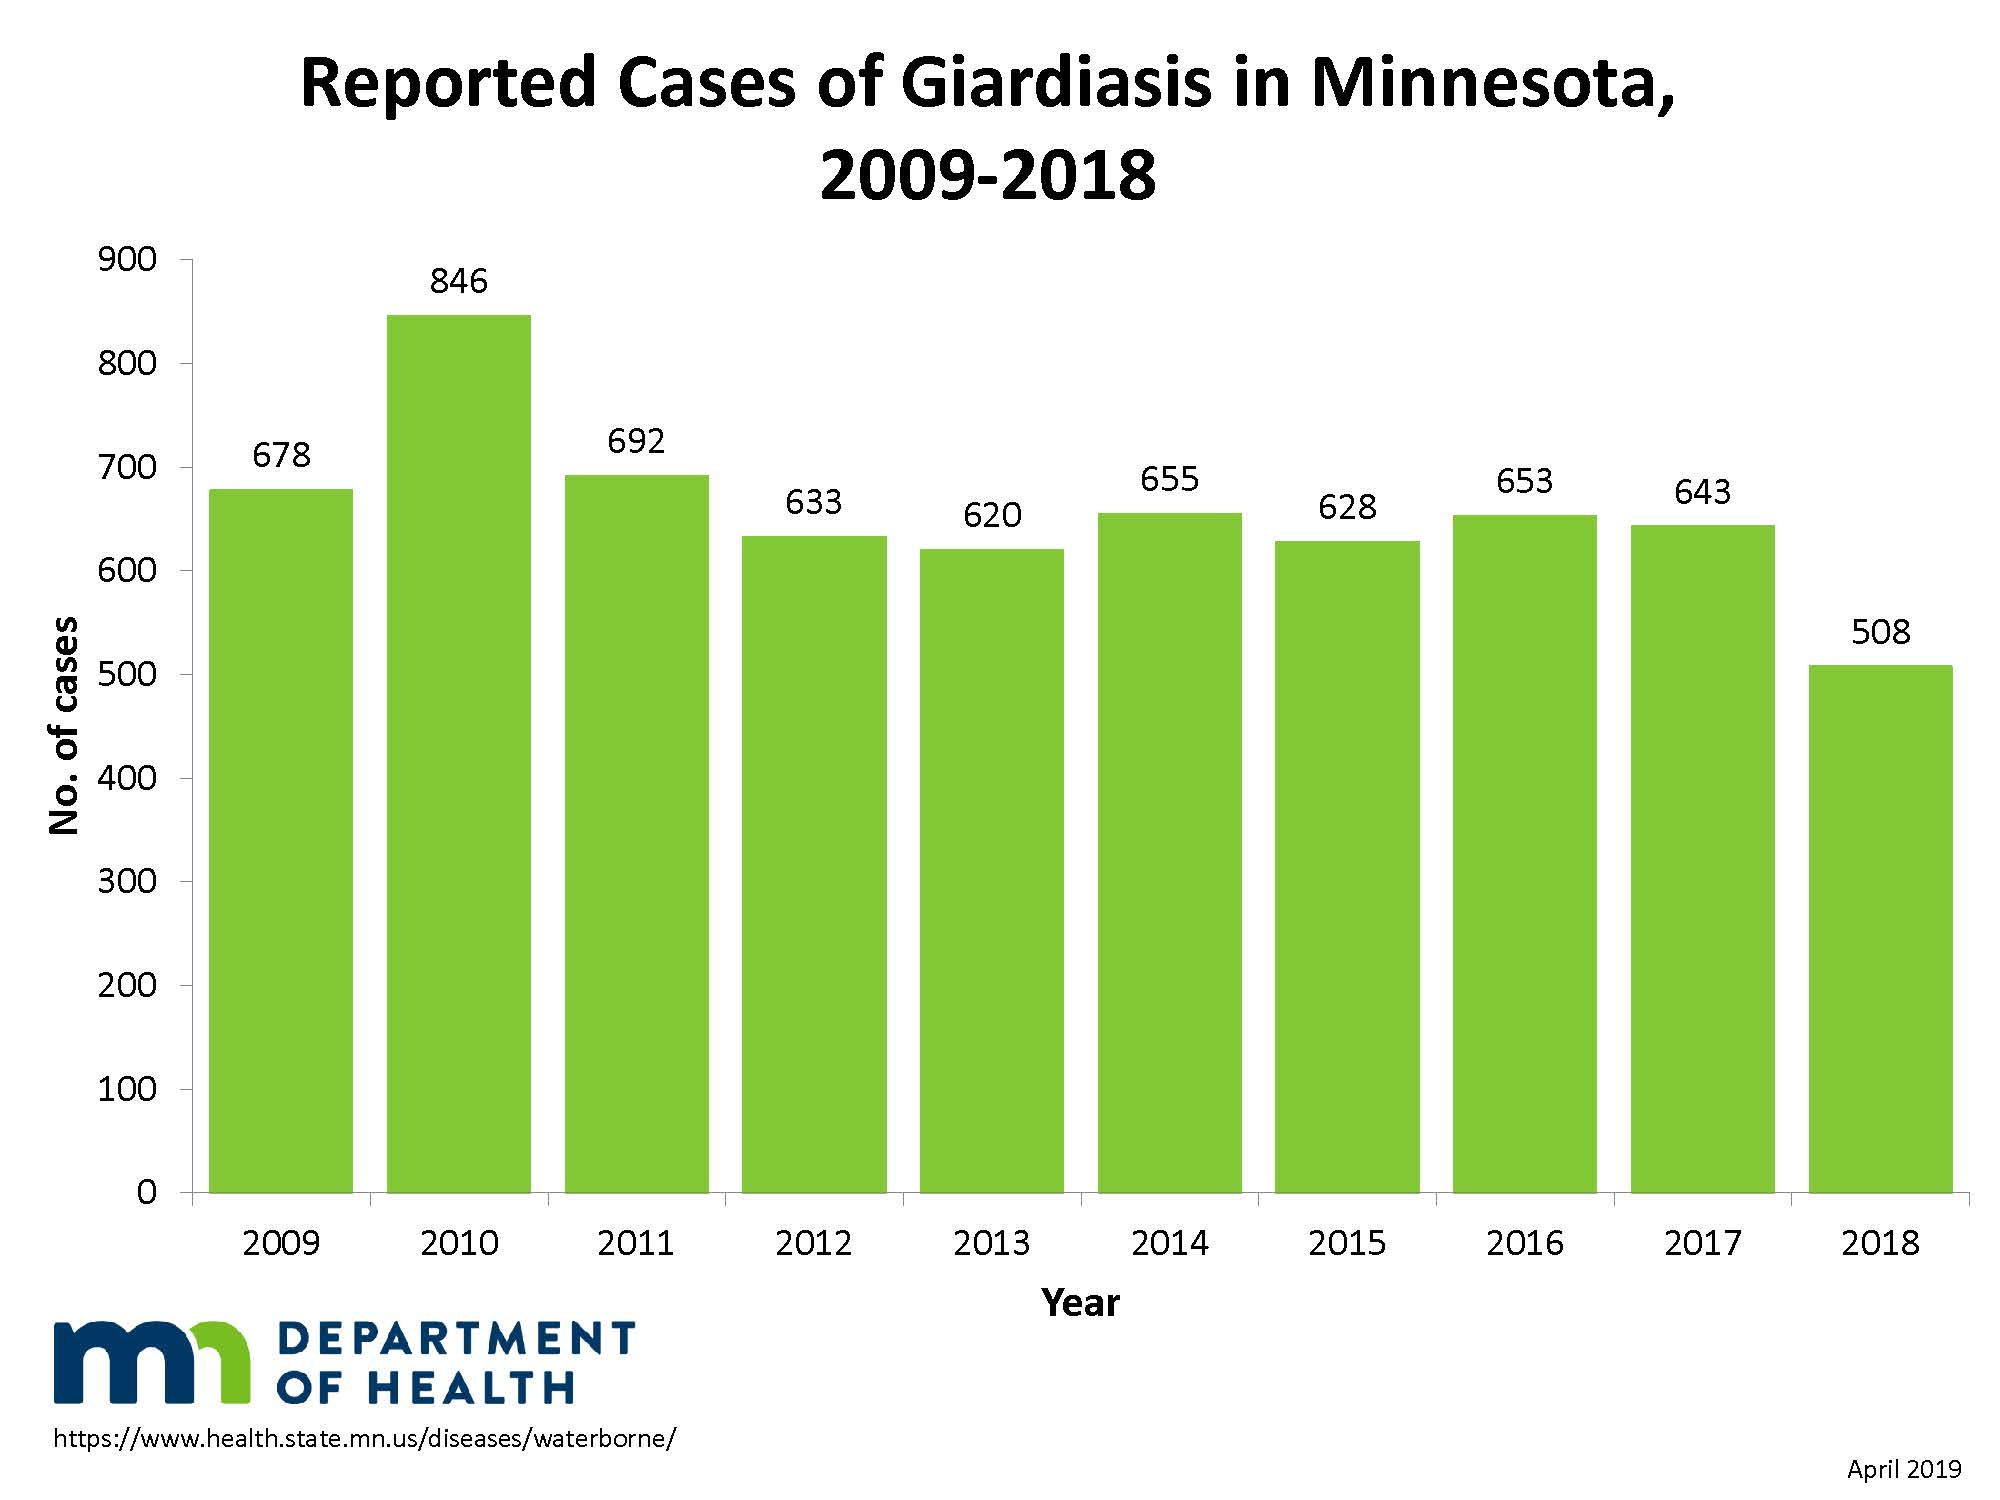 Reported giardia cases in Minnesota 2009-2018